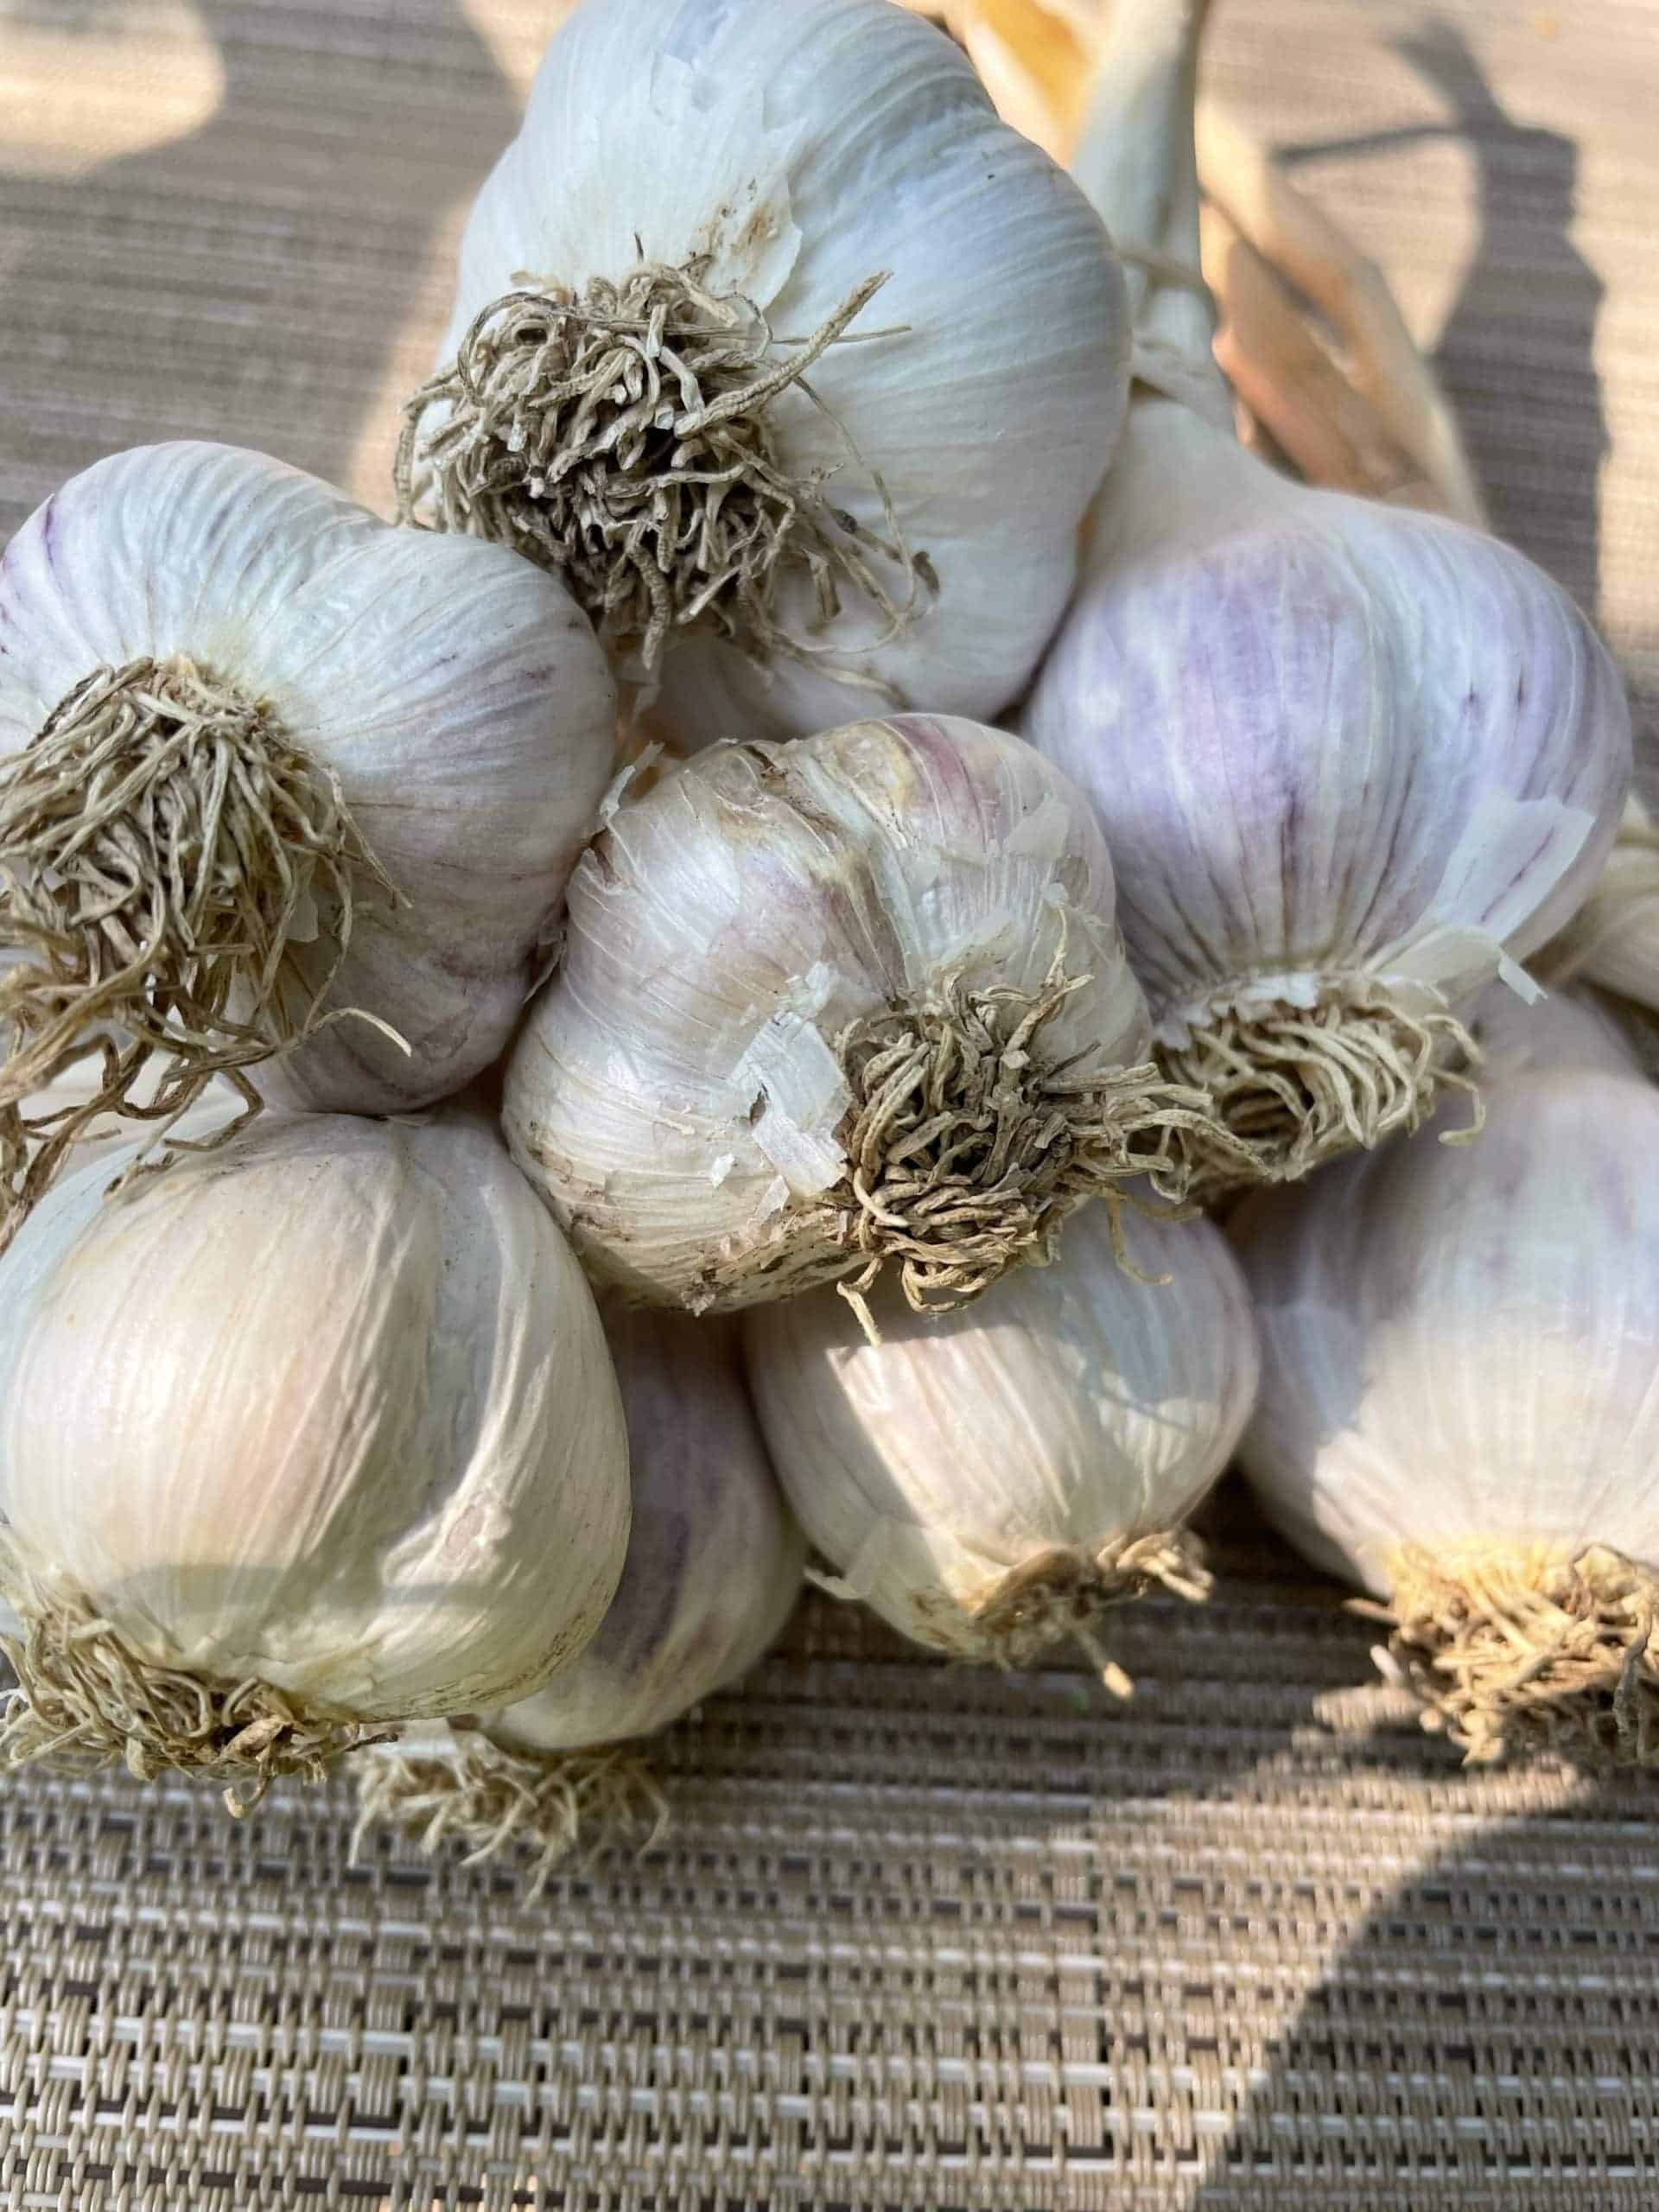 Garlic bunches